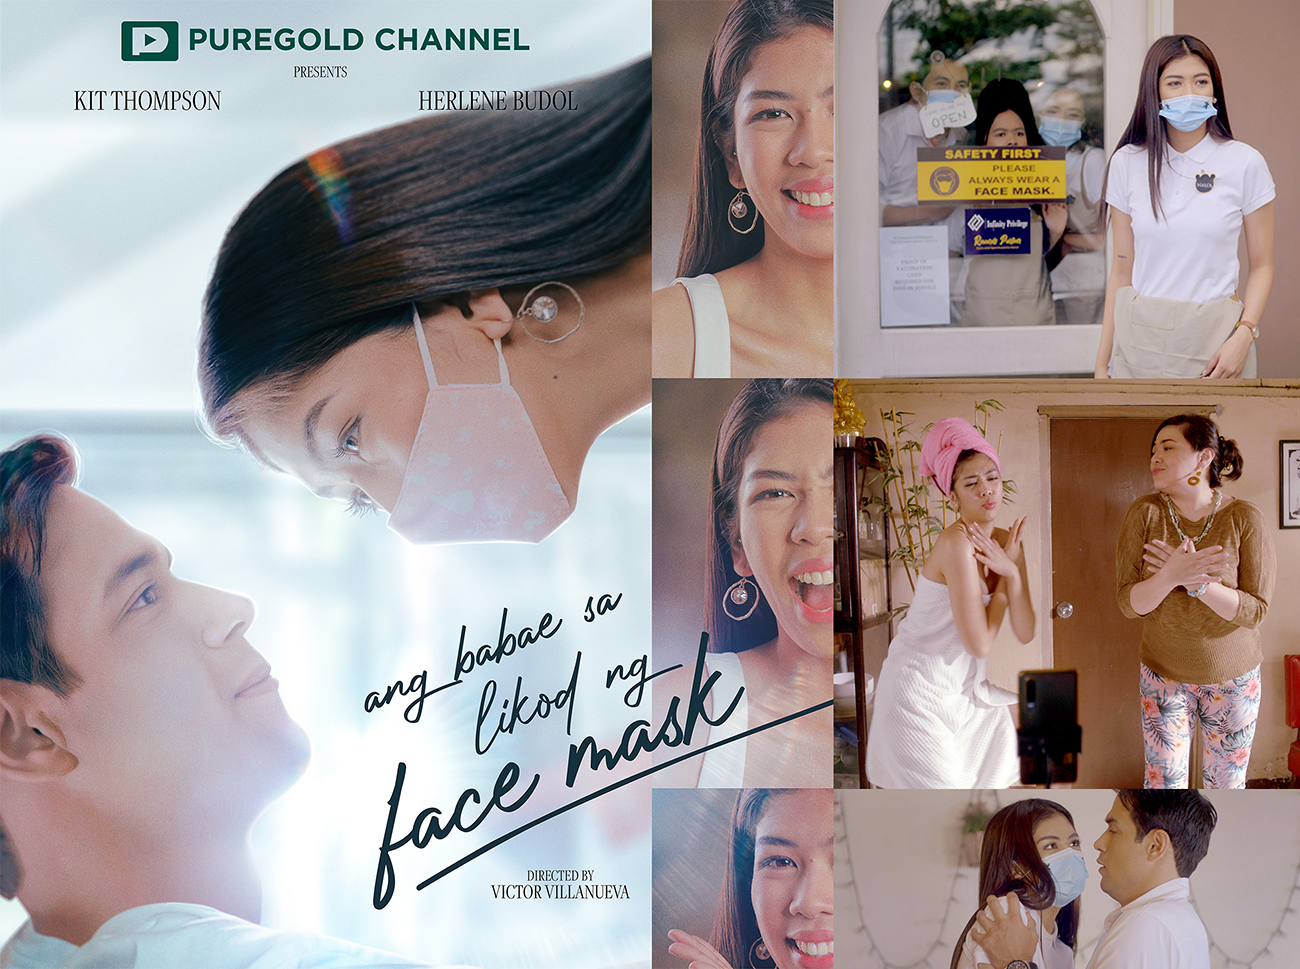 Puregold Channel launches the much-awaited “Ang Babae Sa Likod Ng Face Mask” Romcom series